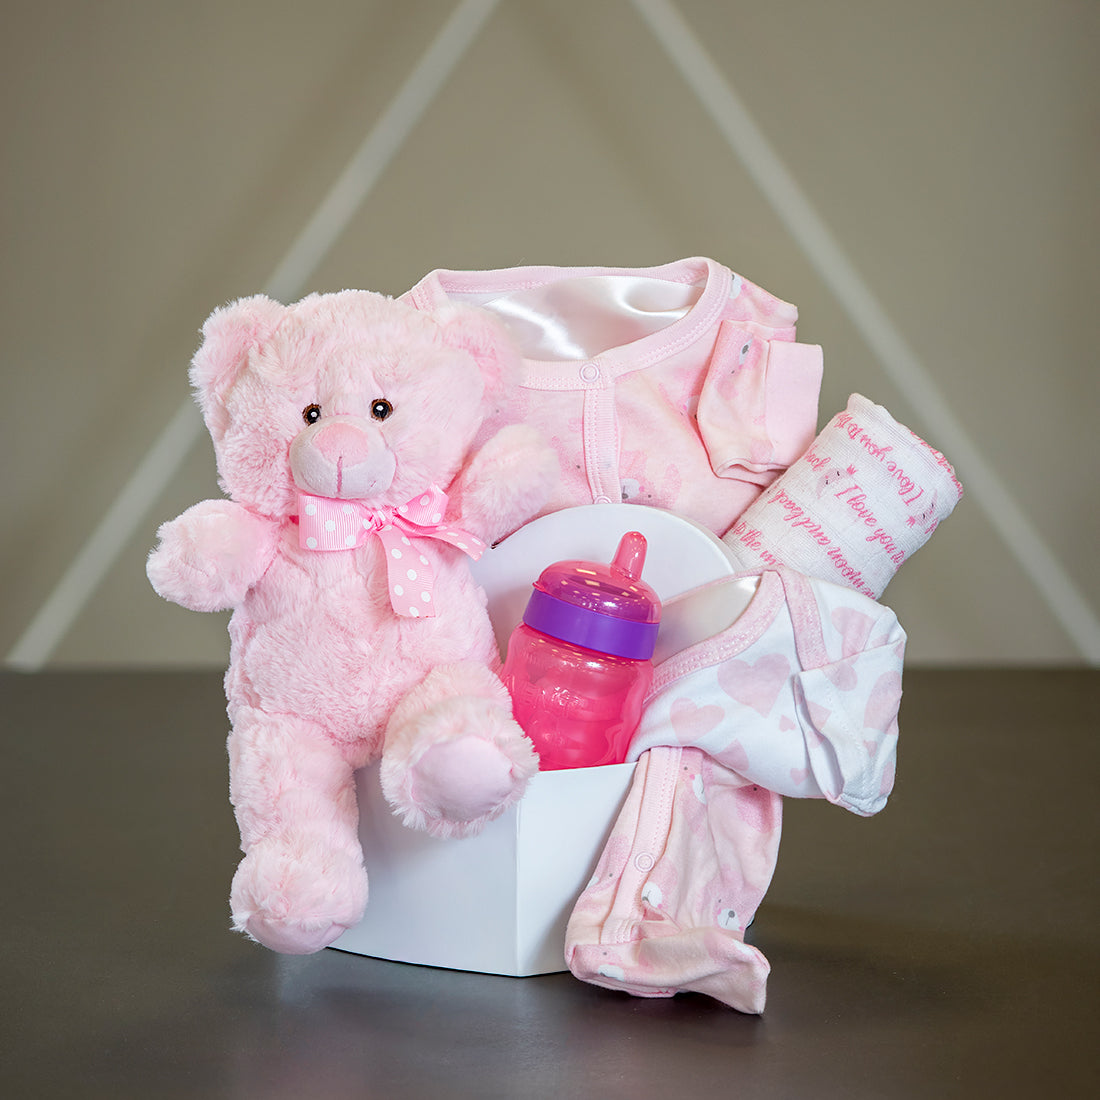 Baby Girl Gift Box with Teddy Bear and pink cozy sleep set